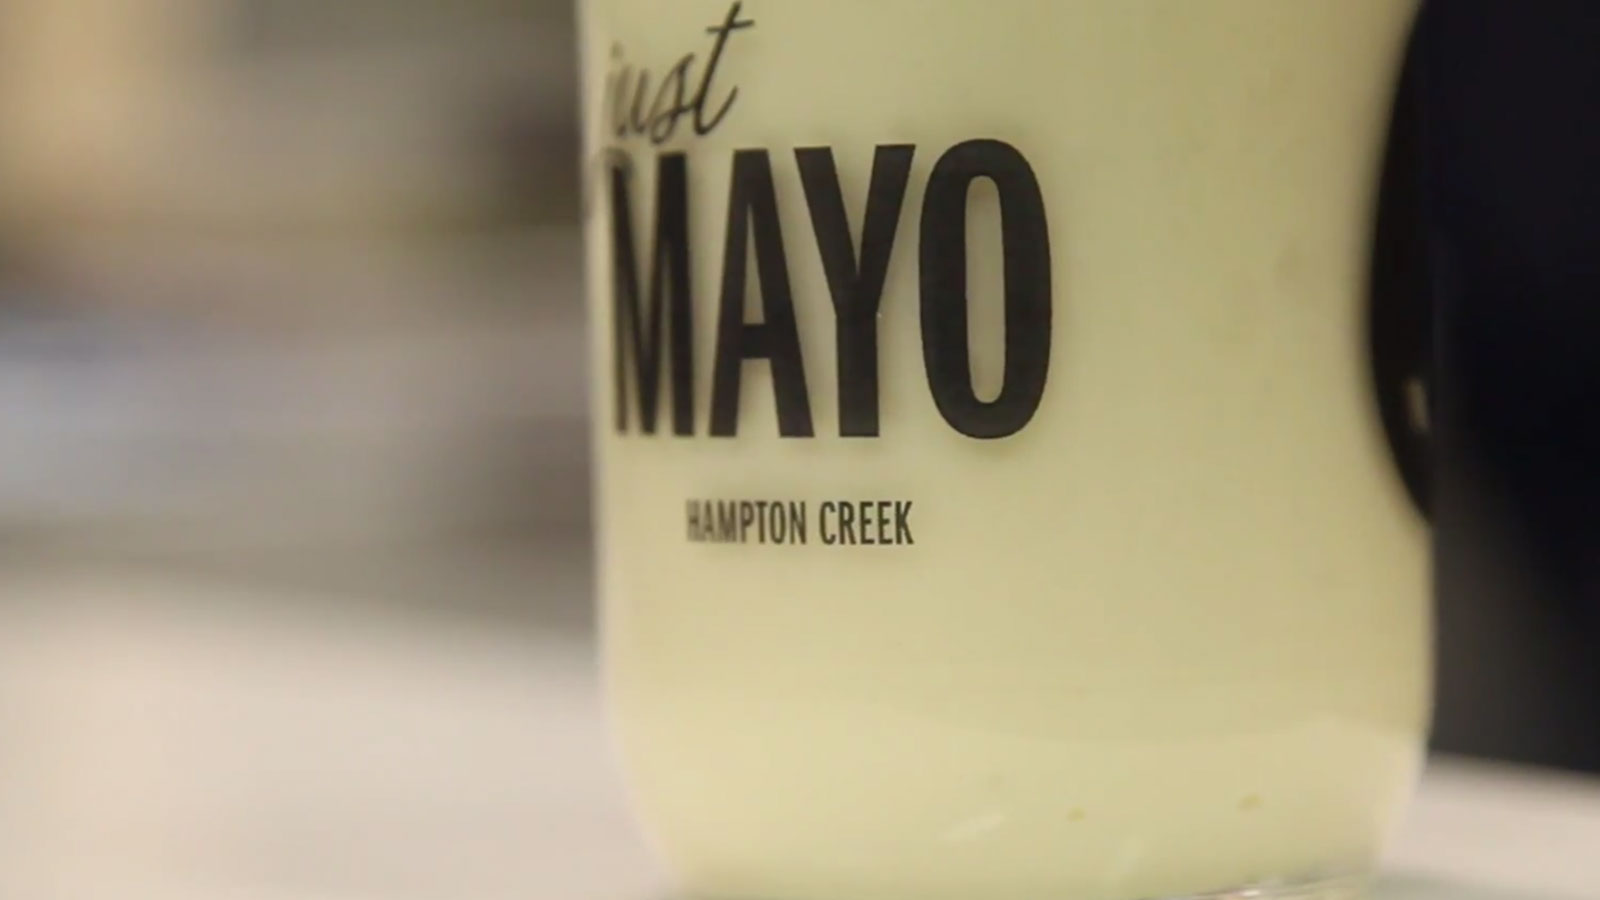 Just Mayo